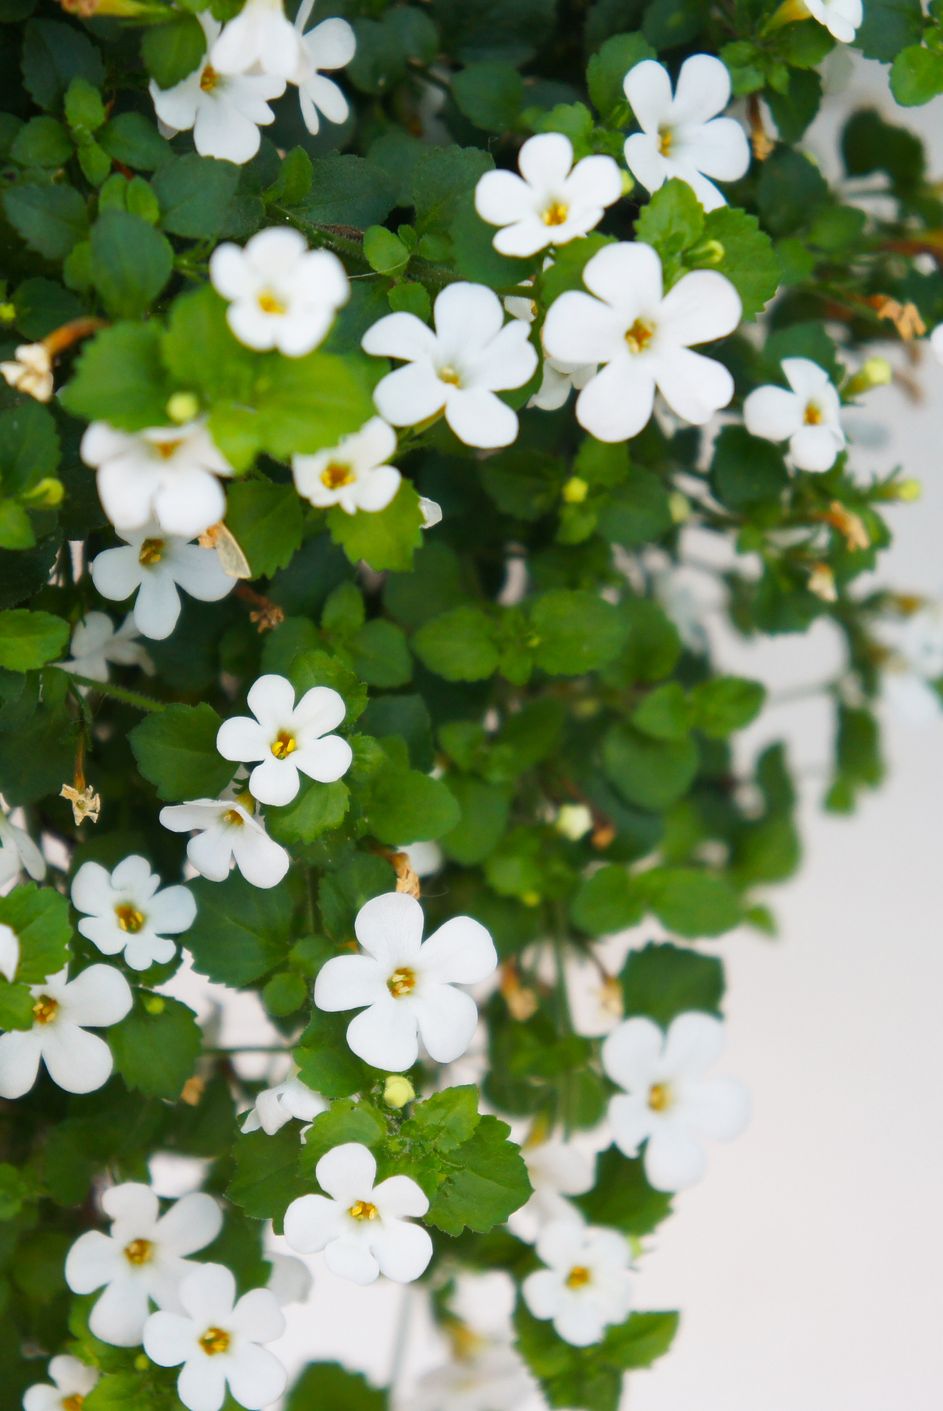 Bacopa monnieri or brahmi white flowers with white background